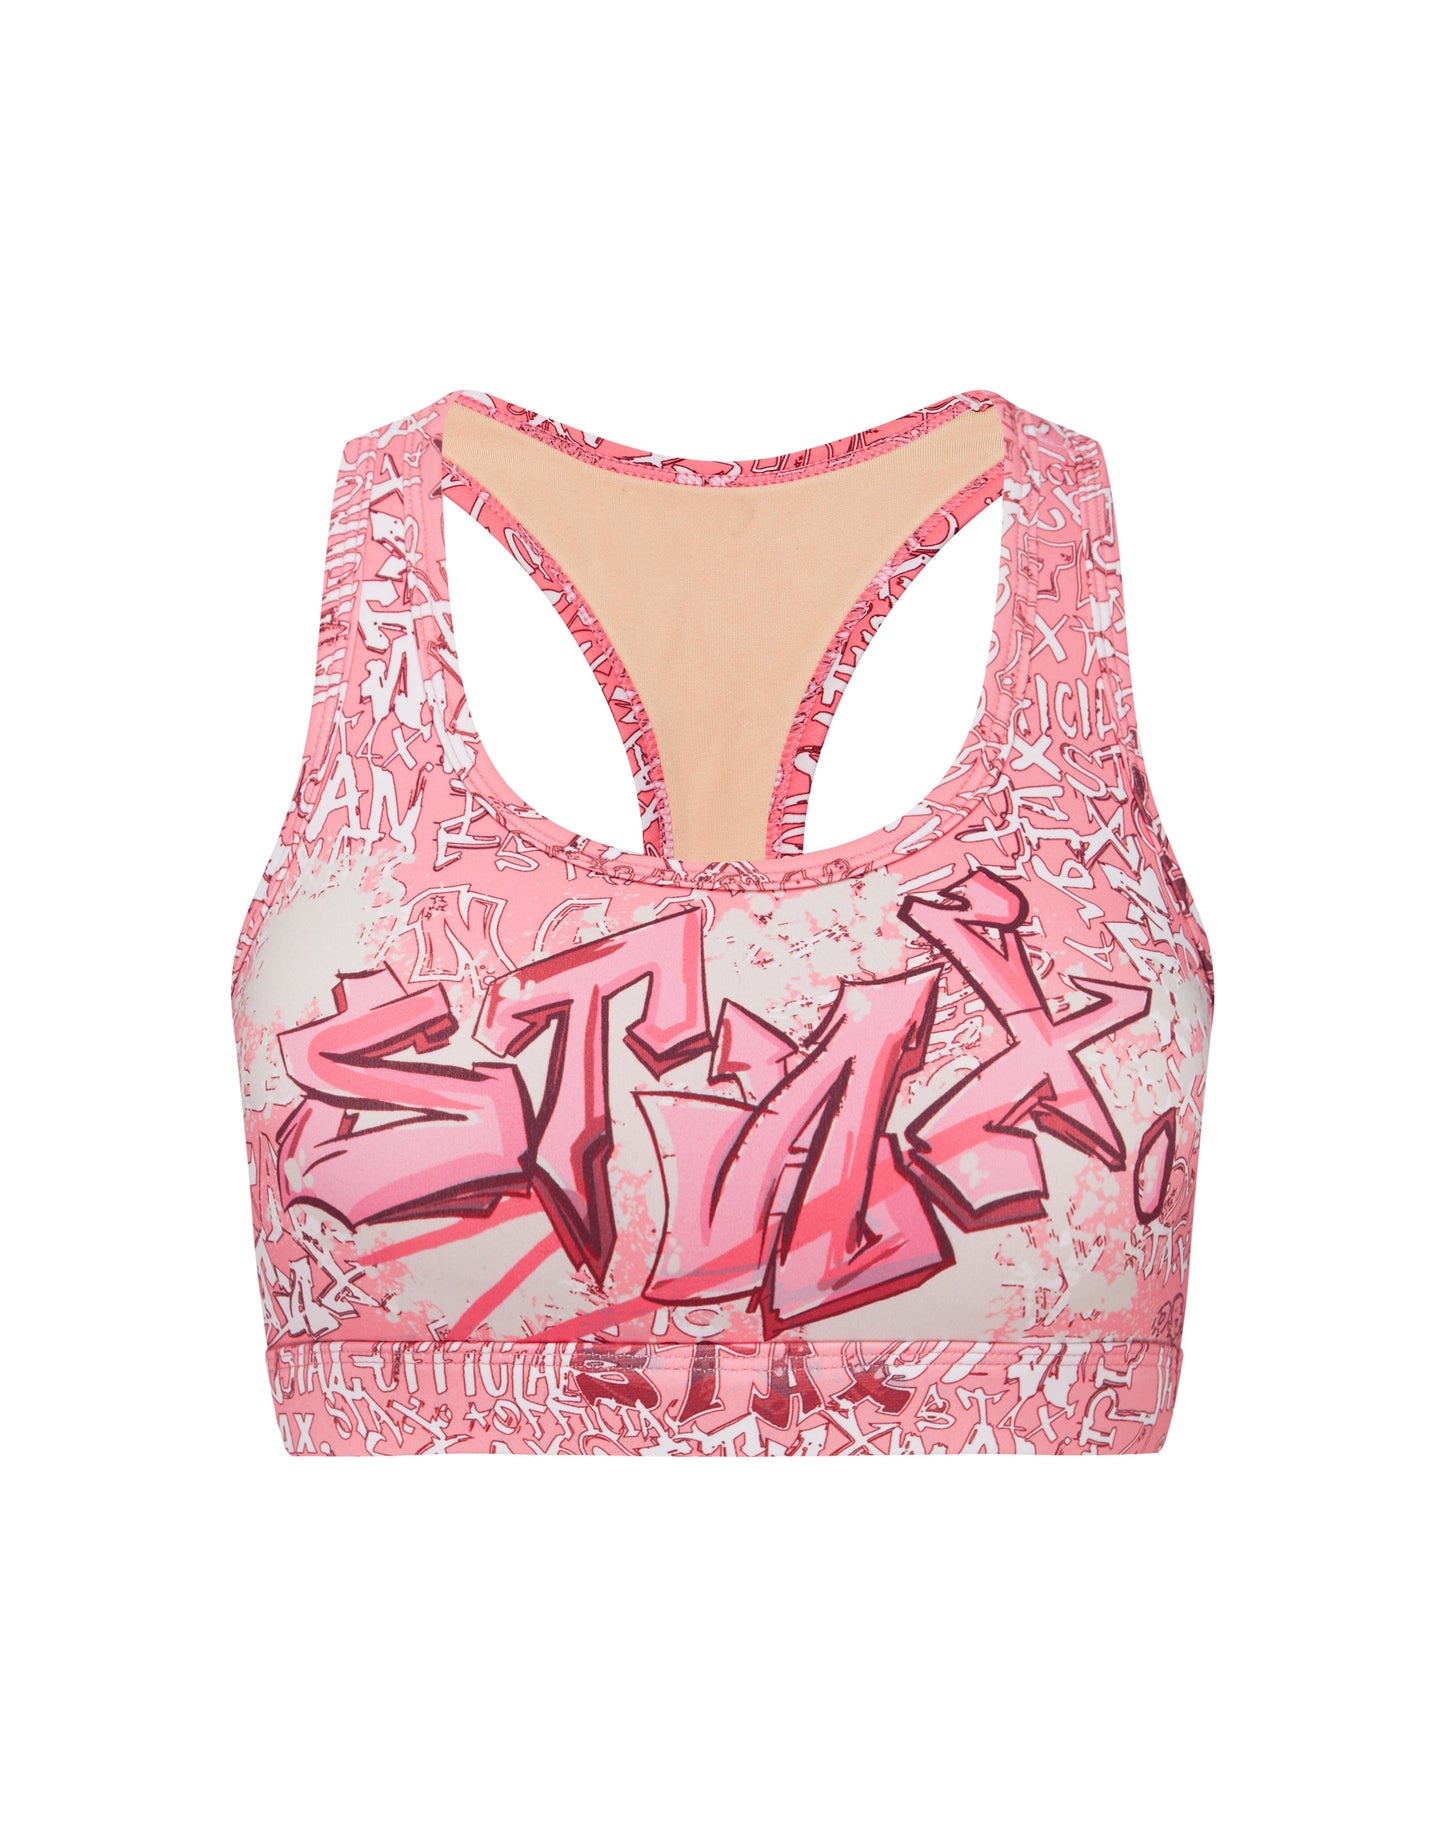 STAX. Graffiti Classic Crop - Pink and White